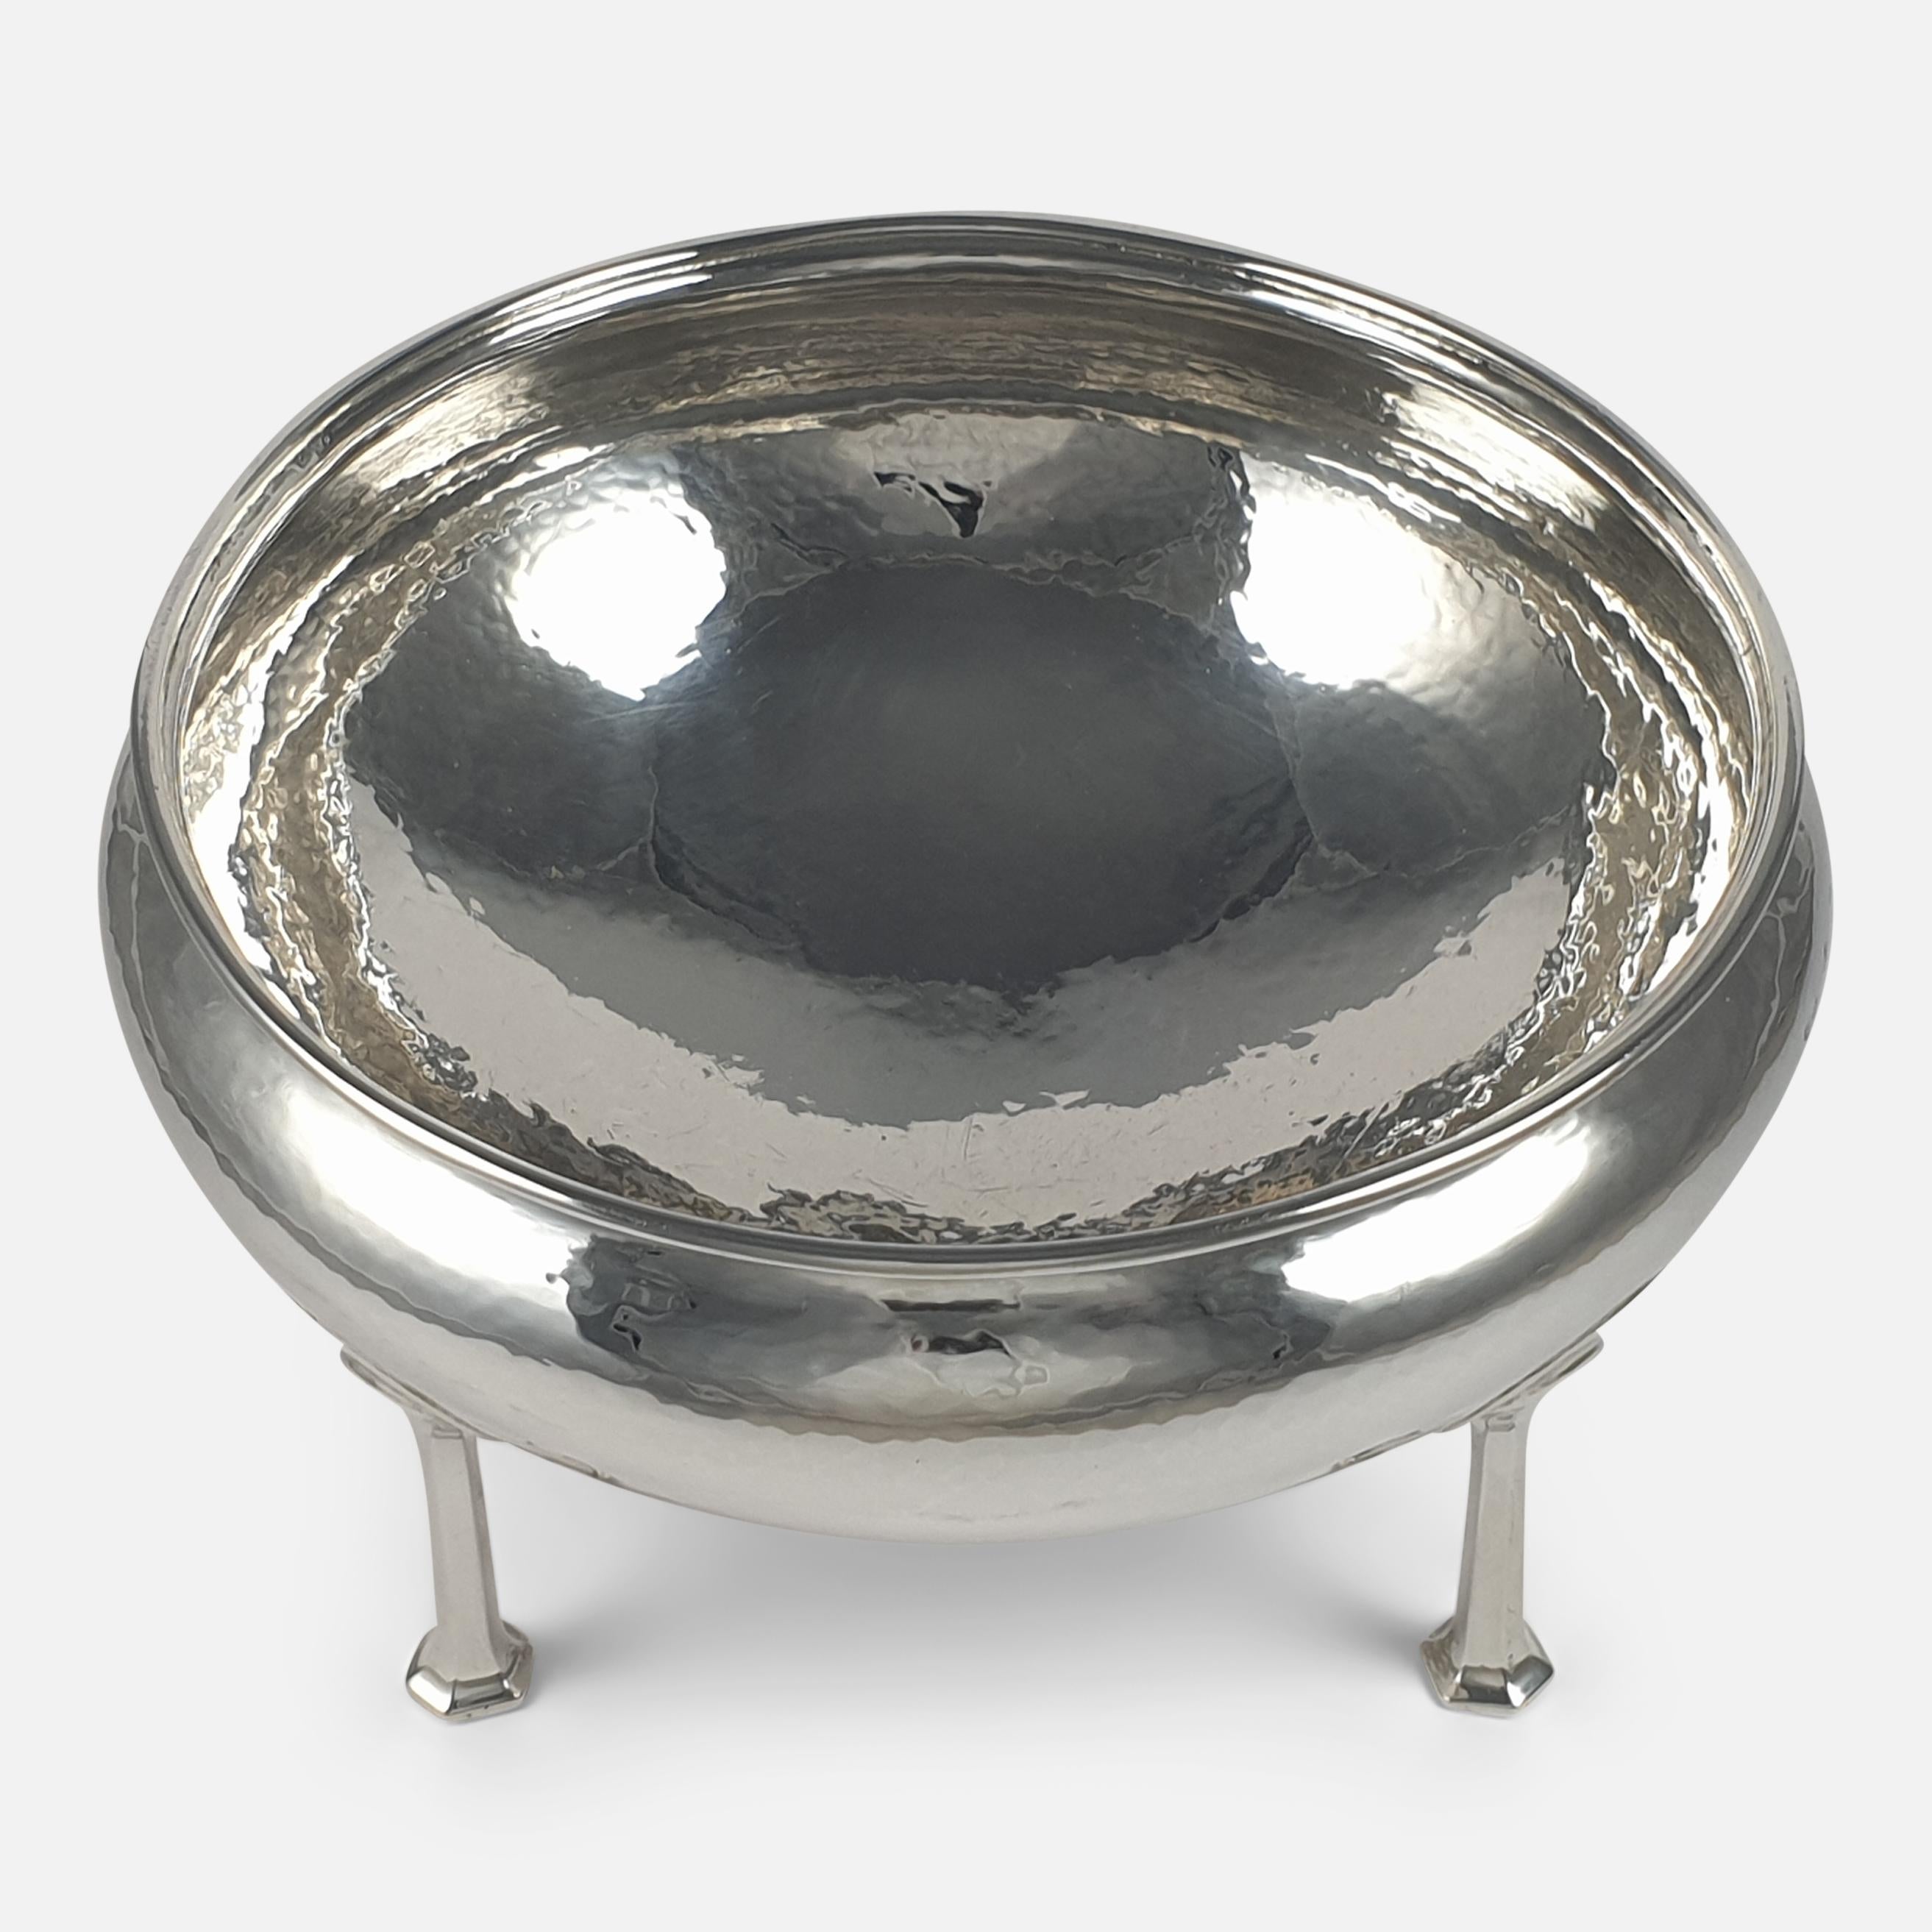 British Arts & Crafts Sterling Silver Hammered Bowl, A. E. Jones, Birmingham, 1912 For Sale